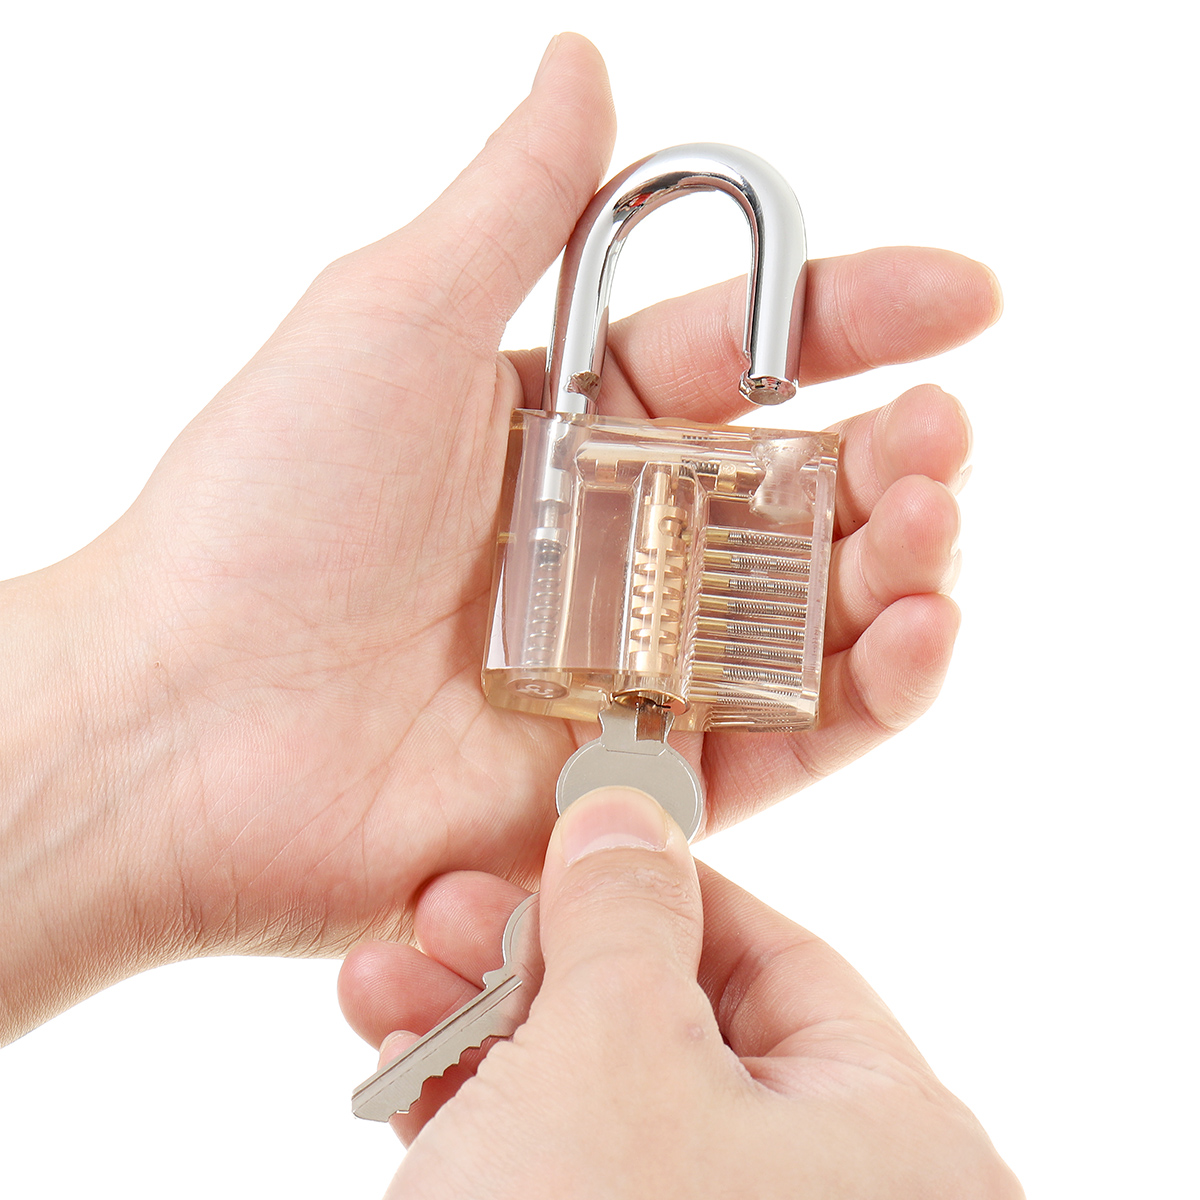 Find 5/19/25PCS Unlocking Locksmith Practice Lock Pick Key Extractor Padlock Lockpick Tool Kits for Sale on Gipsybee.com with cryptocurrencies